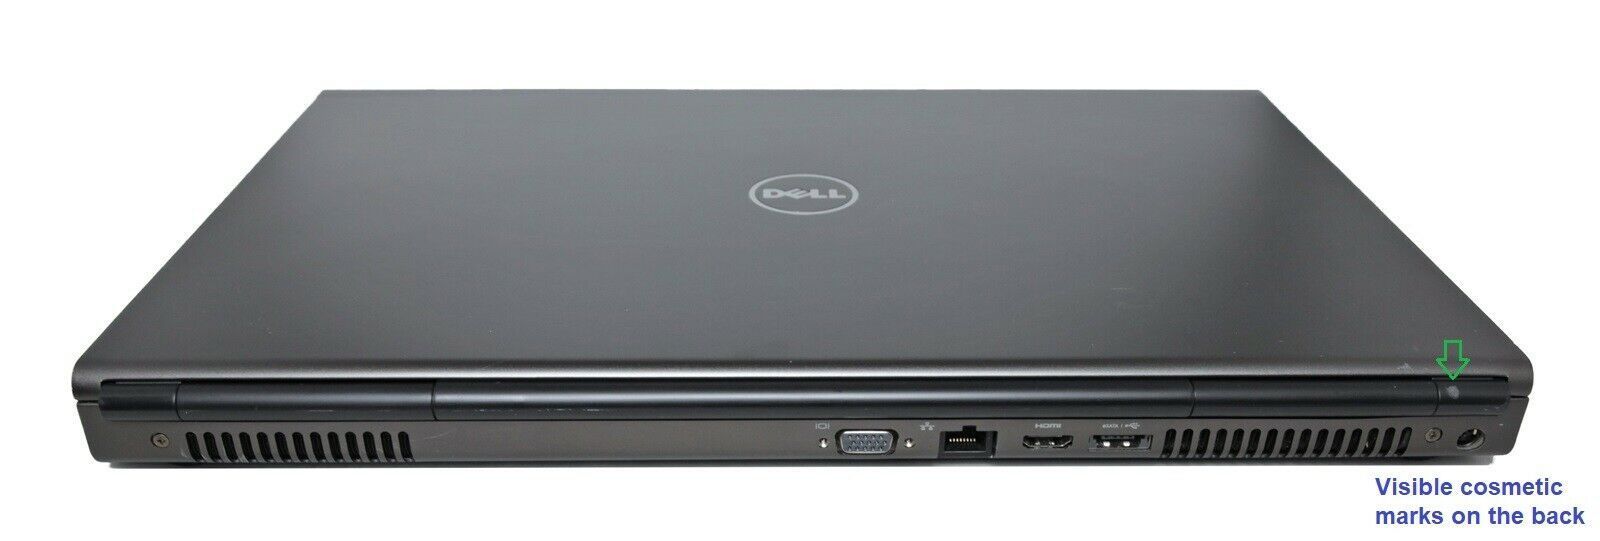 Dell Precision M6800 17" CAD Laptop: Core i7, 32GB RAM, 250GB+HDD, VAT, Warranty - CruiseTech